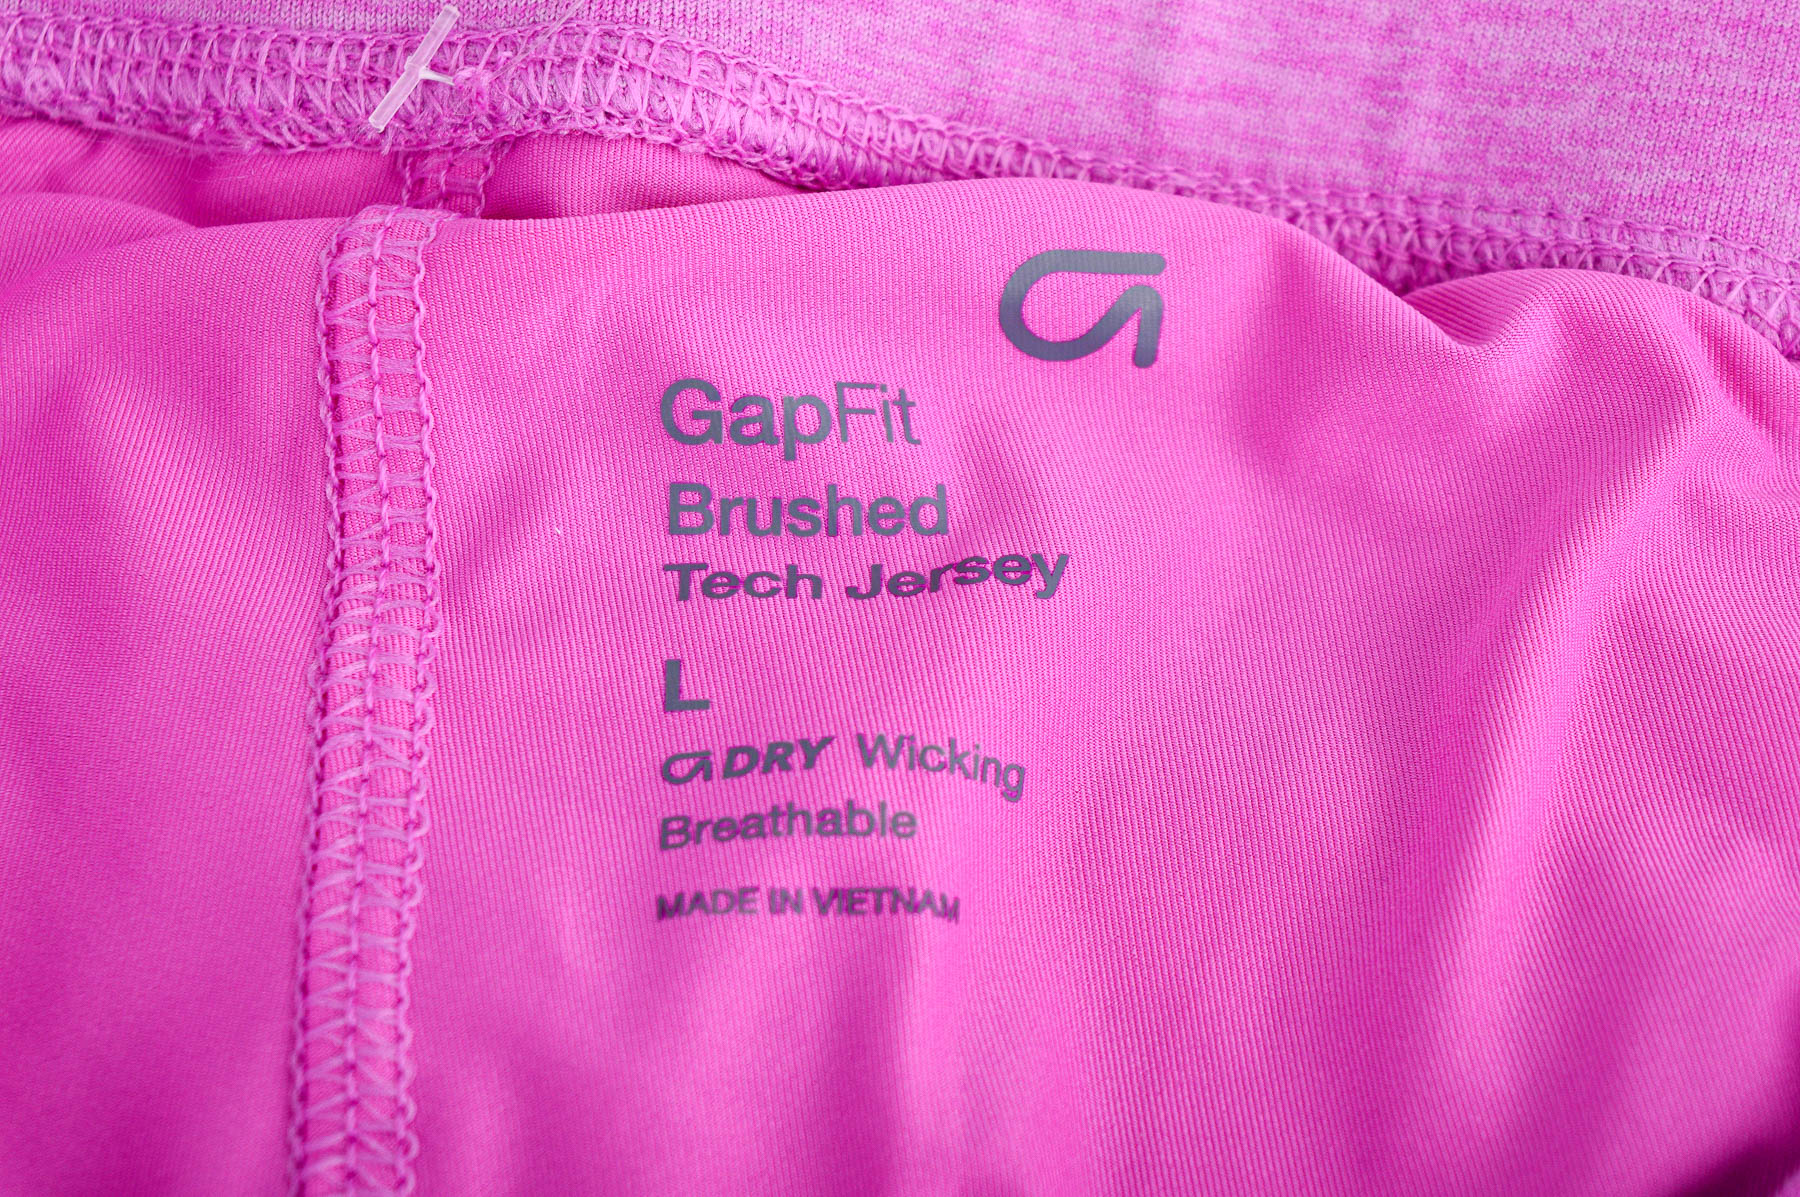 Skirt - pants - GapFit - 2